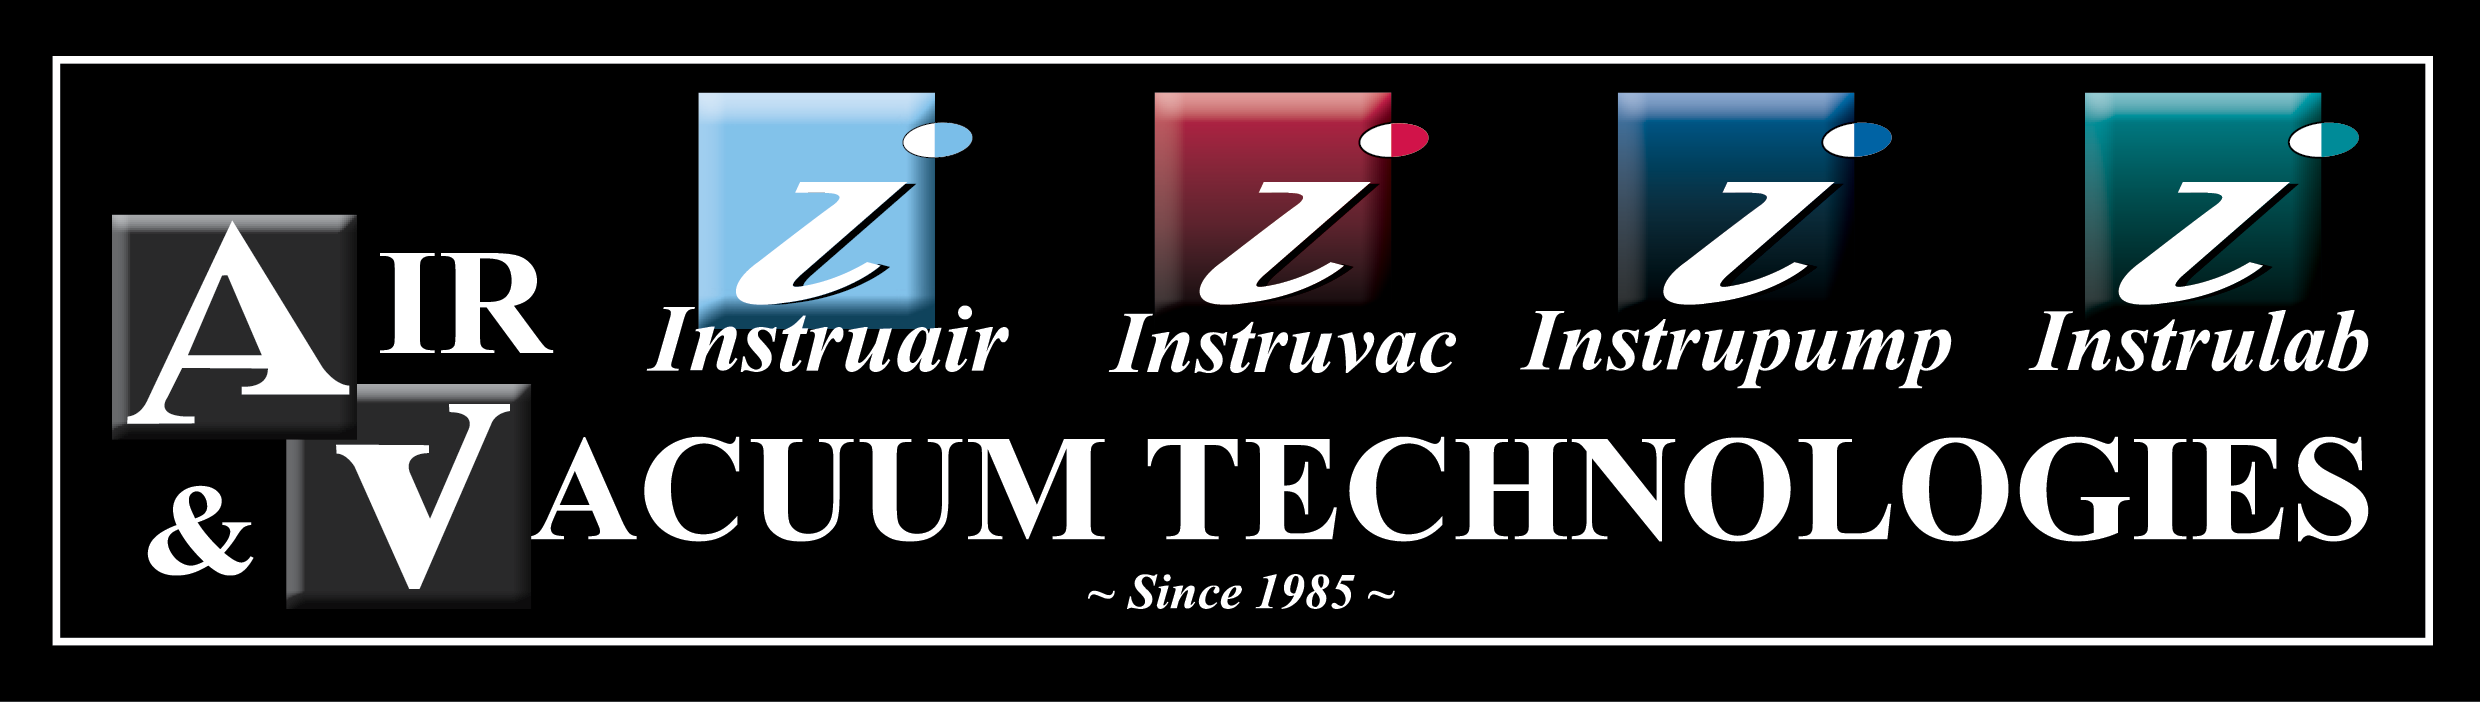 Air & Vacuum Technologies (Pty) Ltd logo